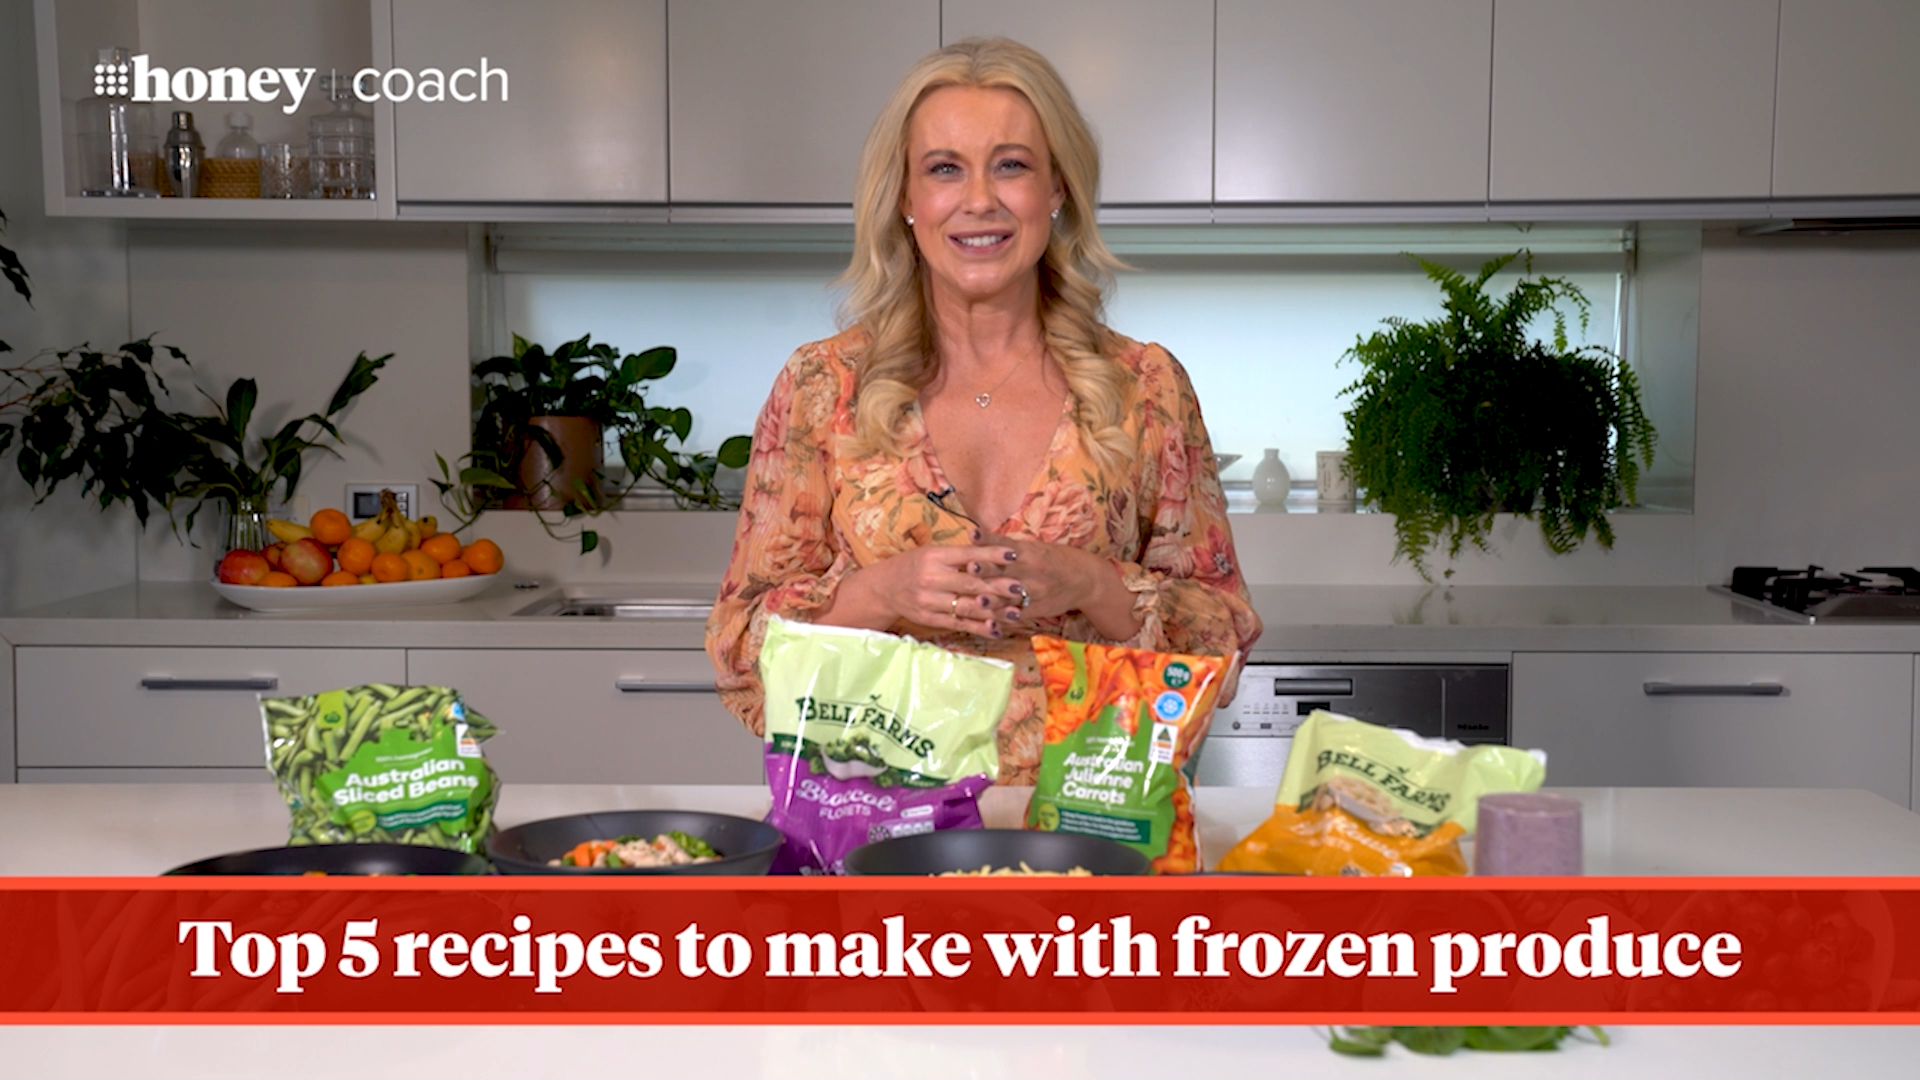 Dietitian's top 5 frozen produce recipes